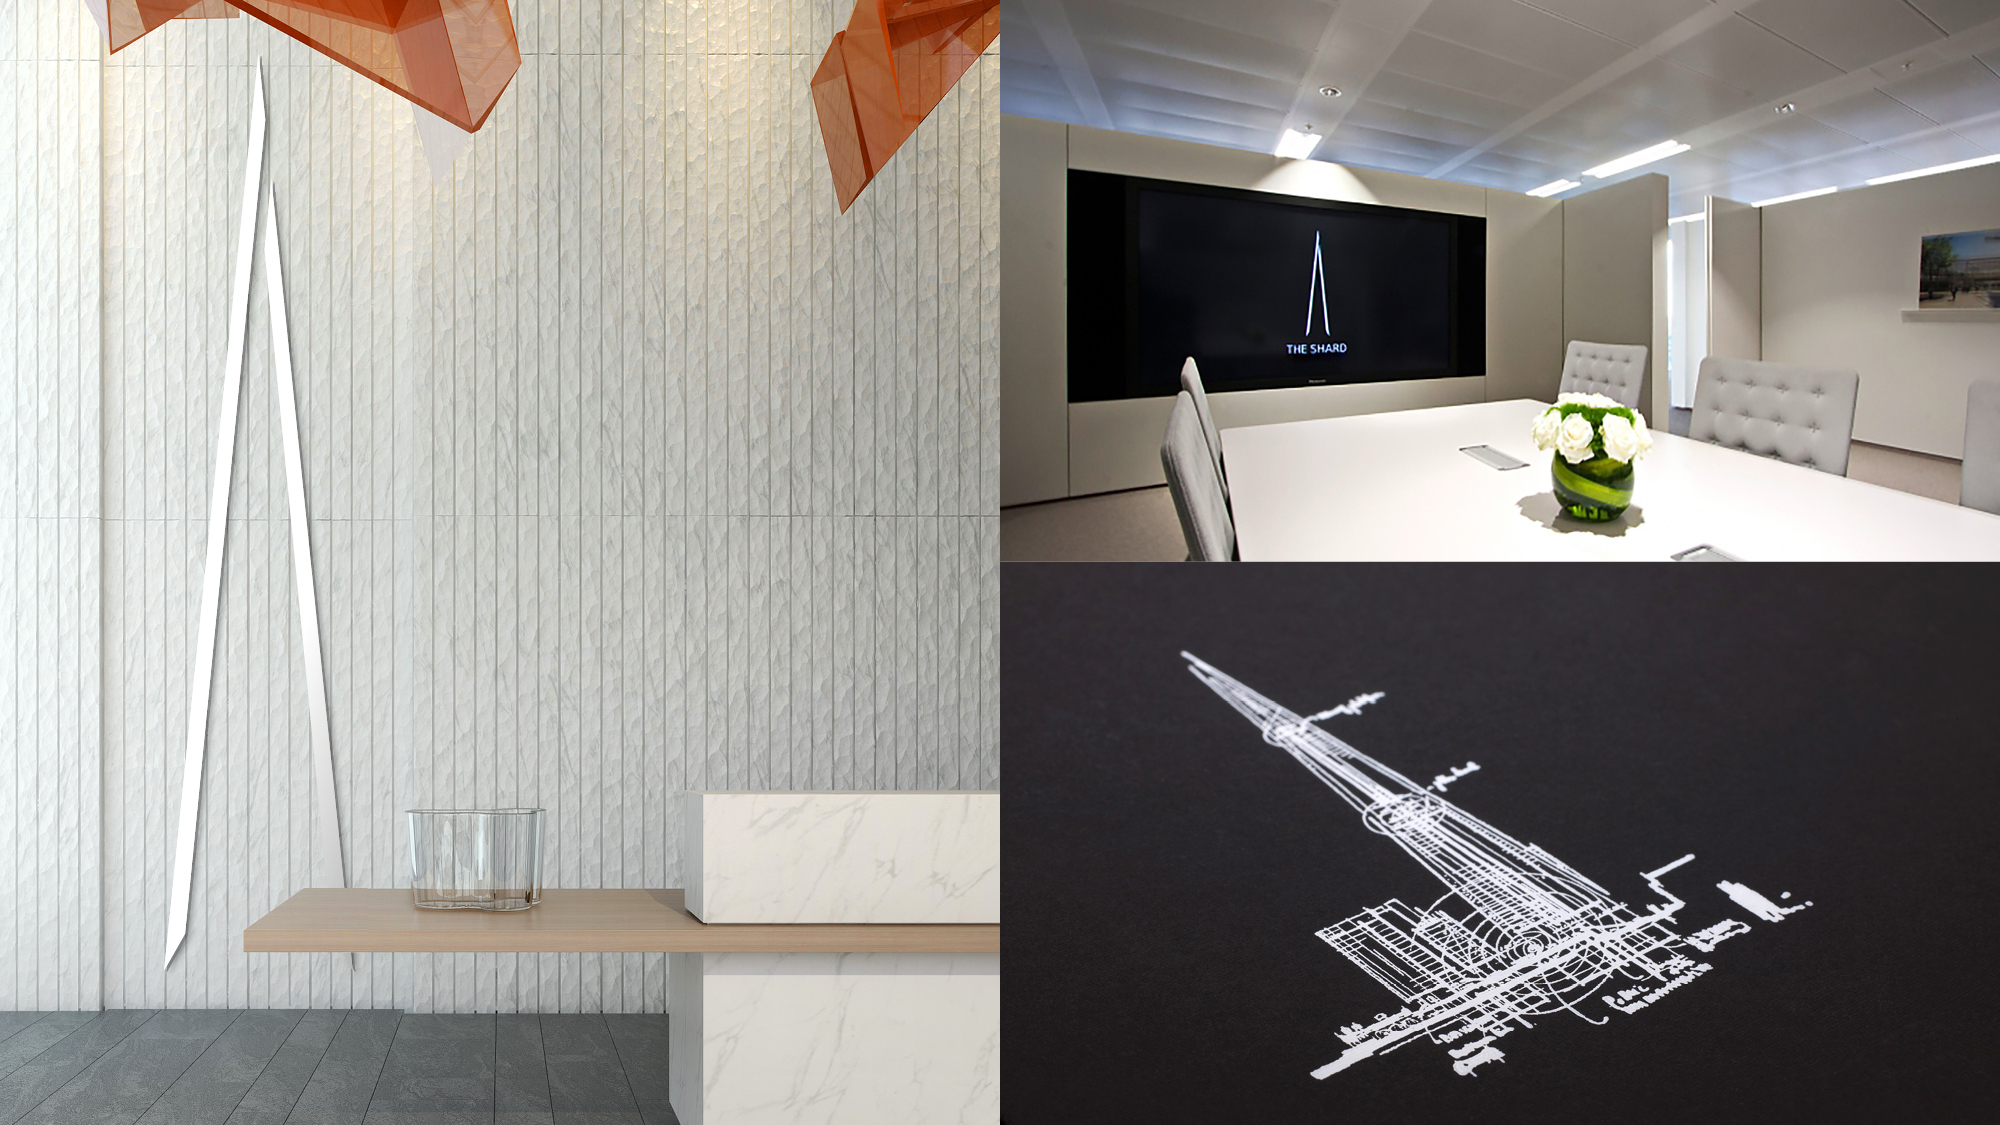 Entity-3-Three-Brand-Design-Agency-Sydney-The-Shard-9-experience-environments-interior-signage-illustration